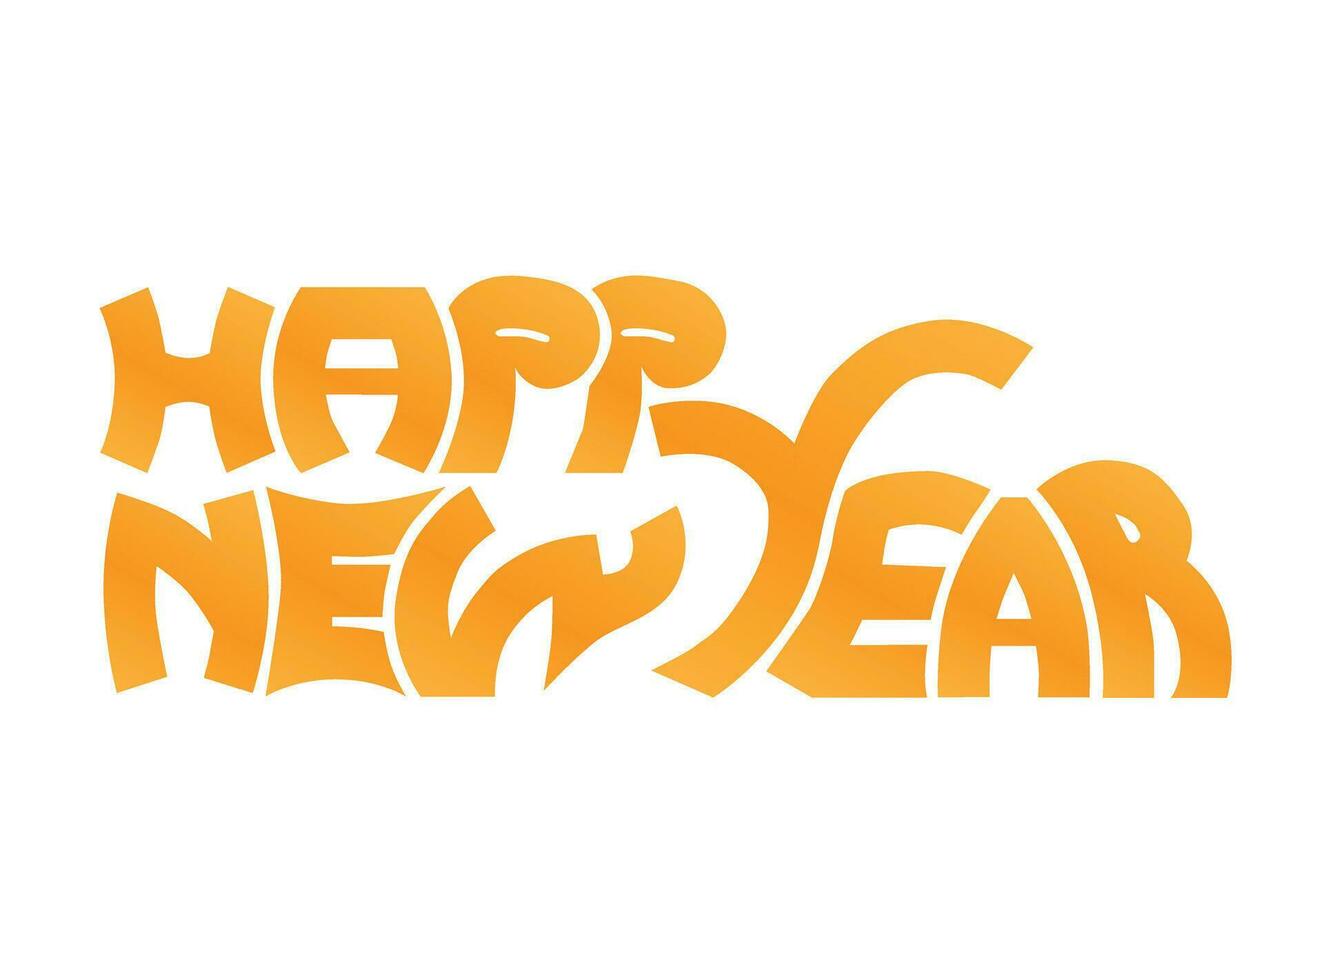 representación tipografía pintada logo símbolo nombre palabra contento nuevo año vector